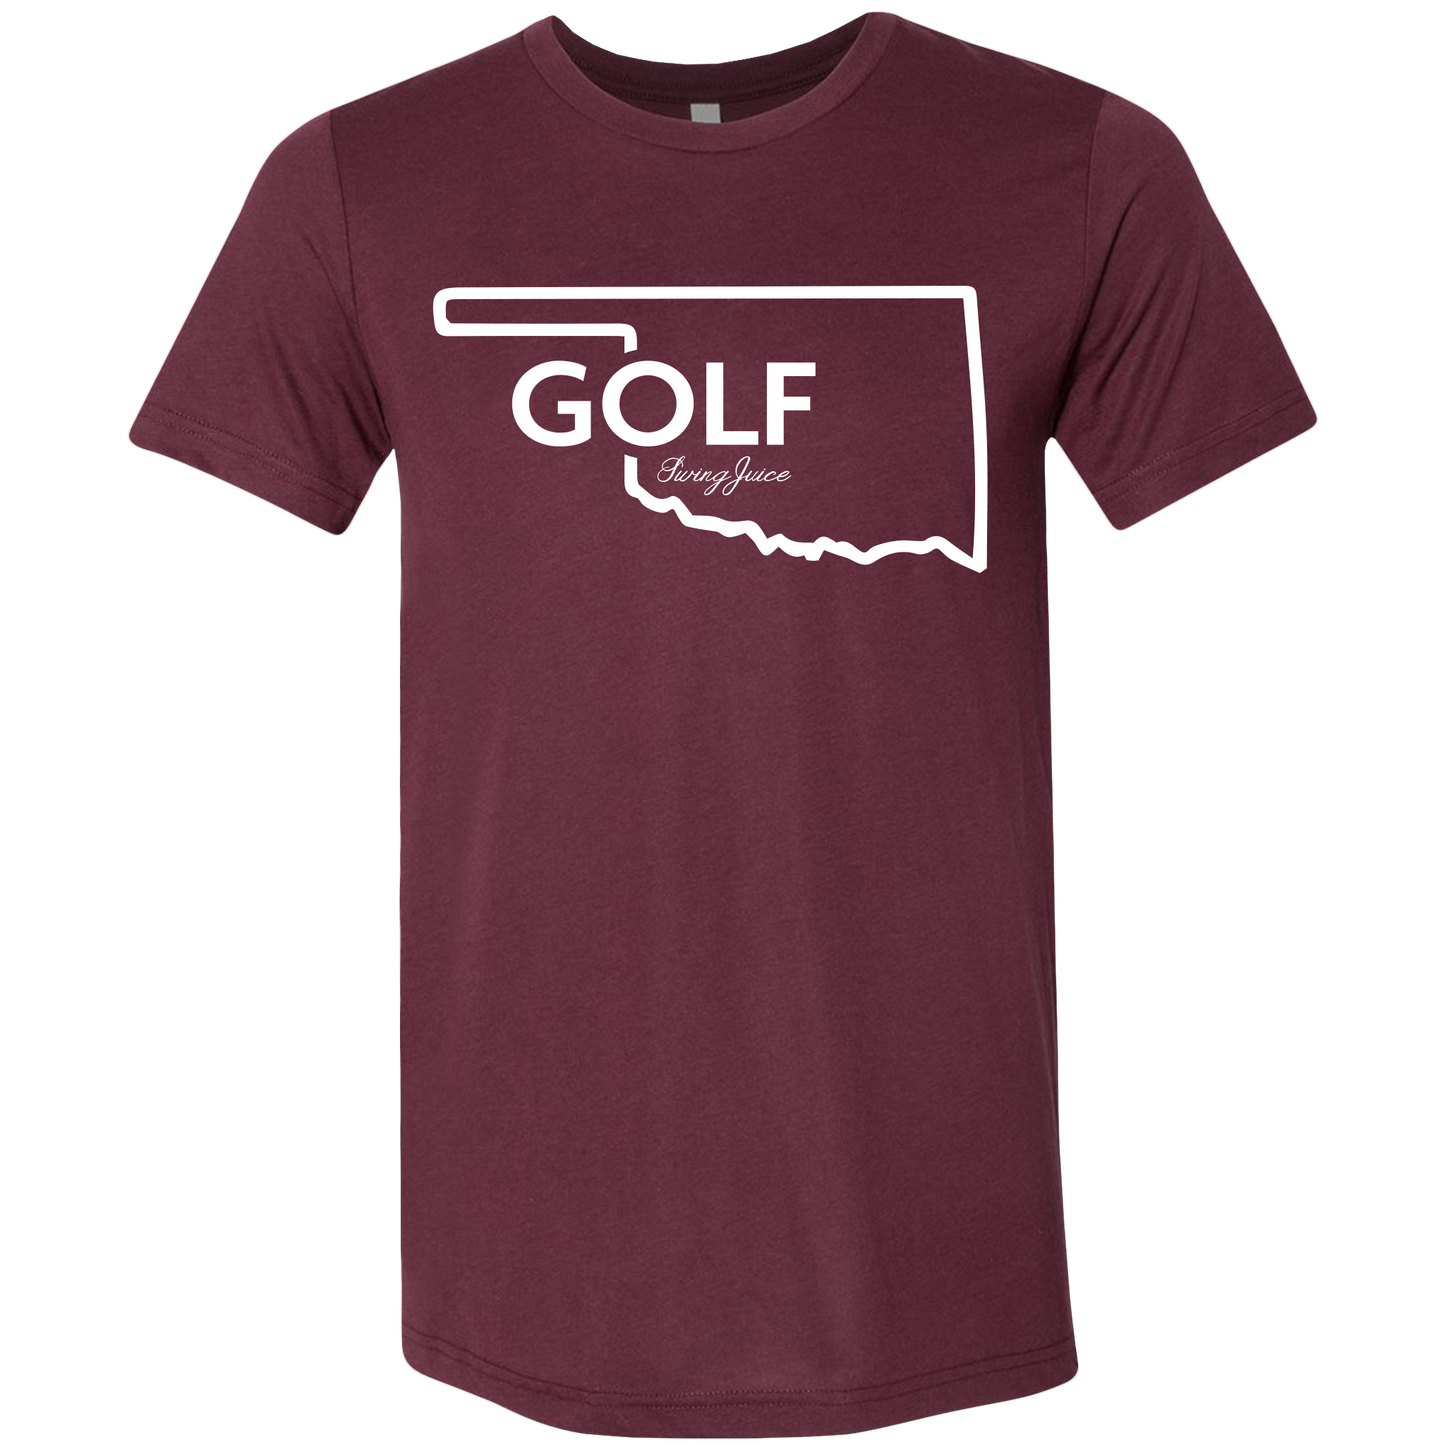 Golf Oklahoma Unisex T-Shirt SwingJuice